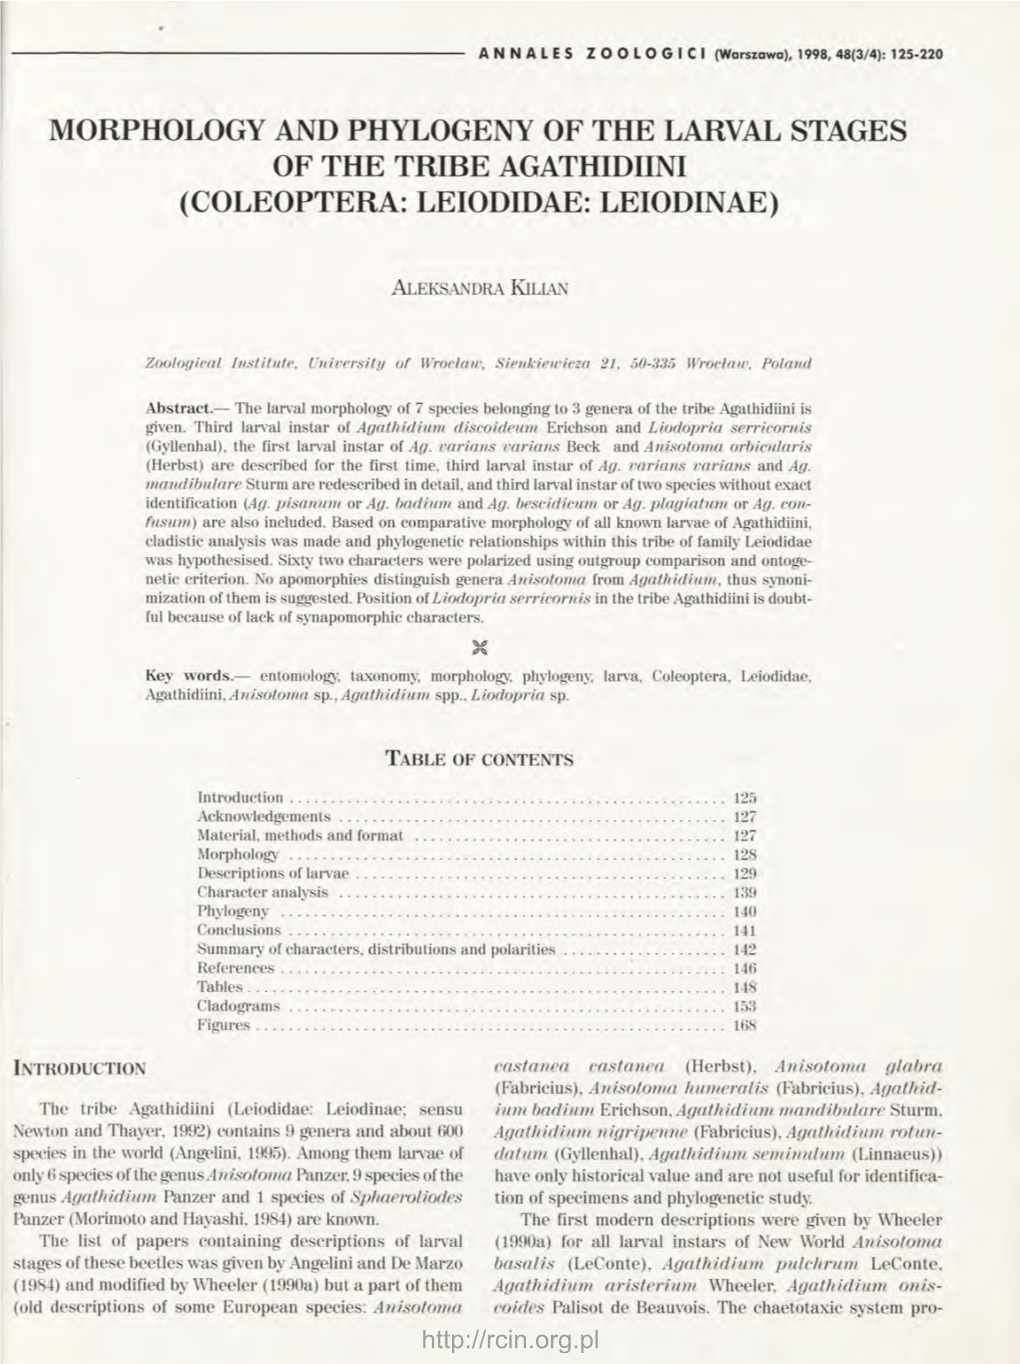 Morphology and Phylogeny of the Larval Stages of the Tribe Agathidiini (Coleoptera: Leiodidae: Leiodinae)